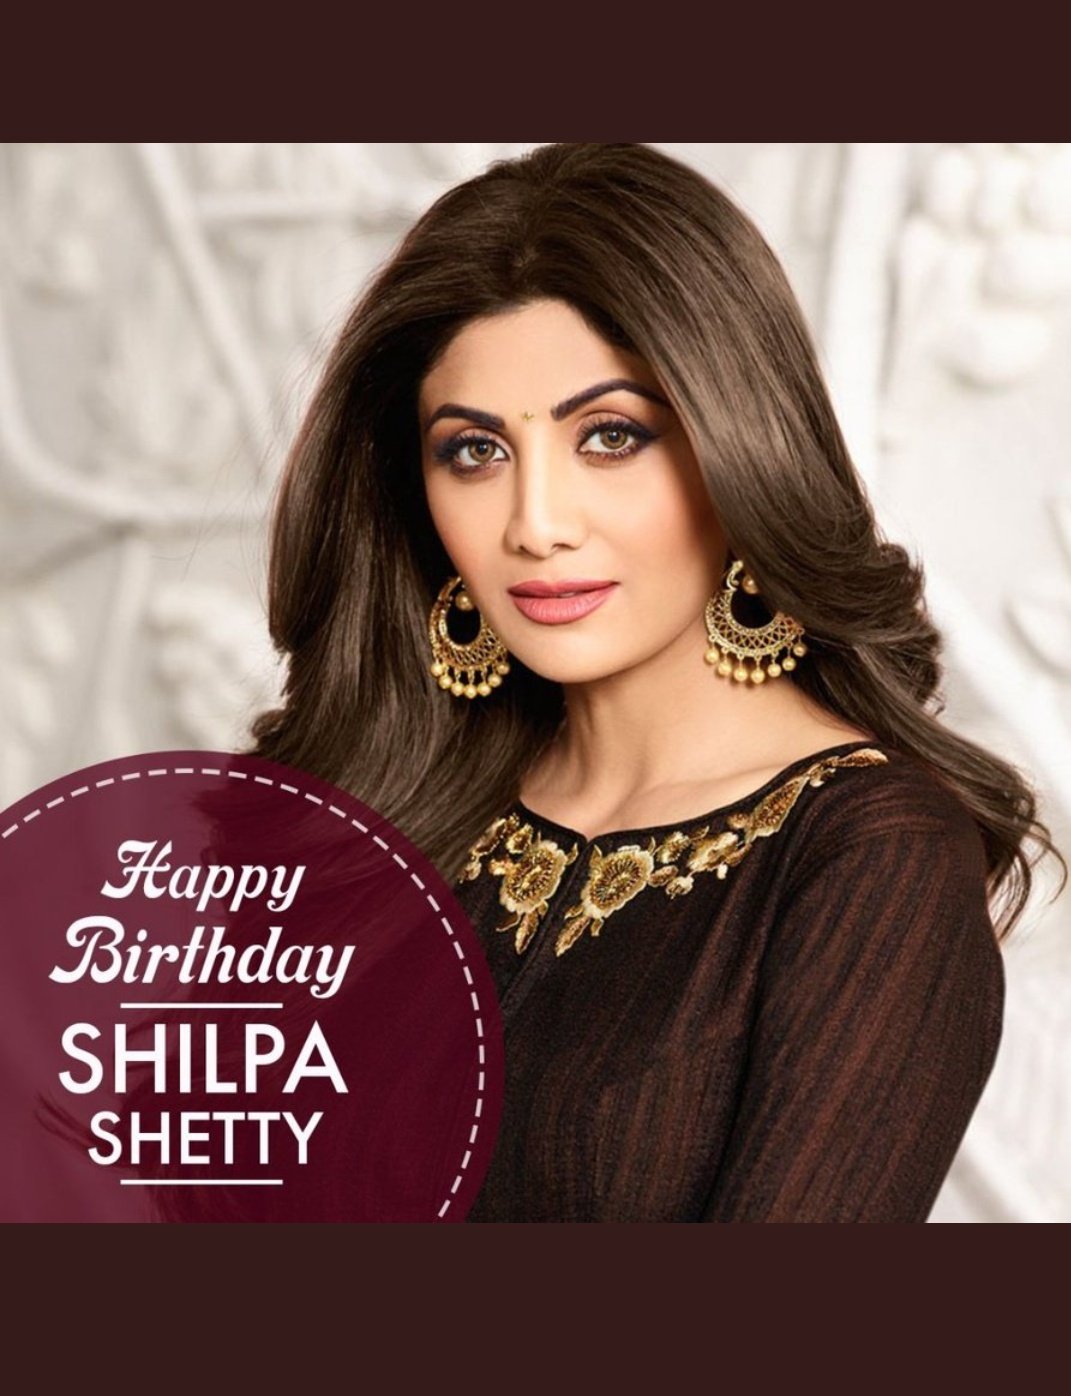 Wishes a very happy birthday to Shilpa Shetty...     